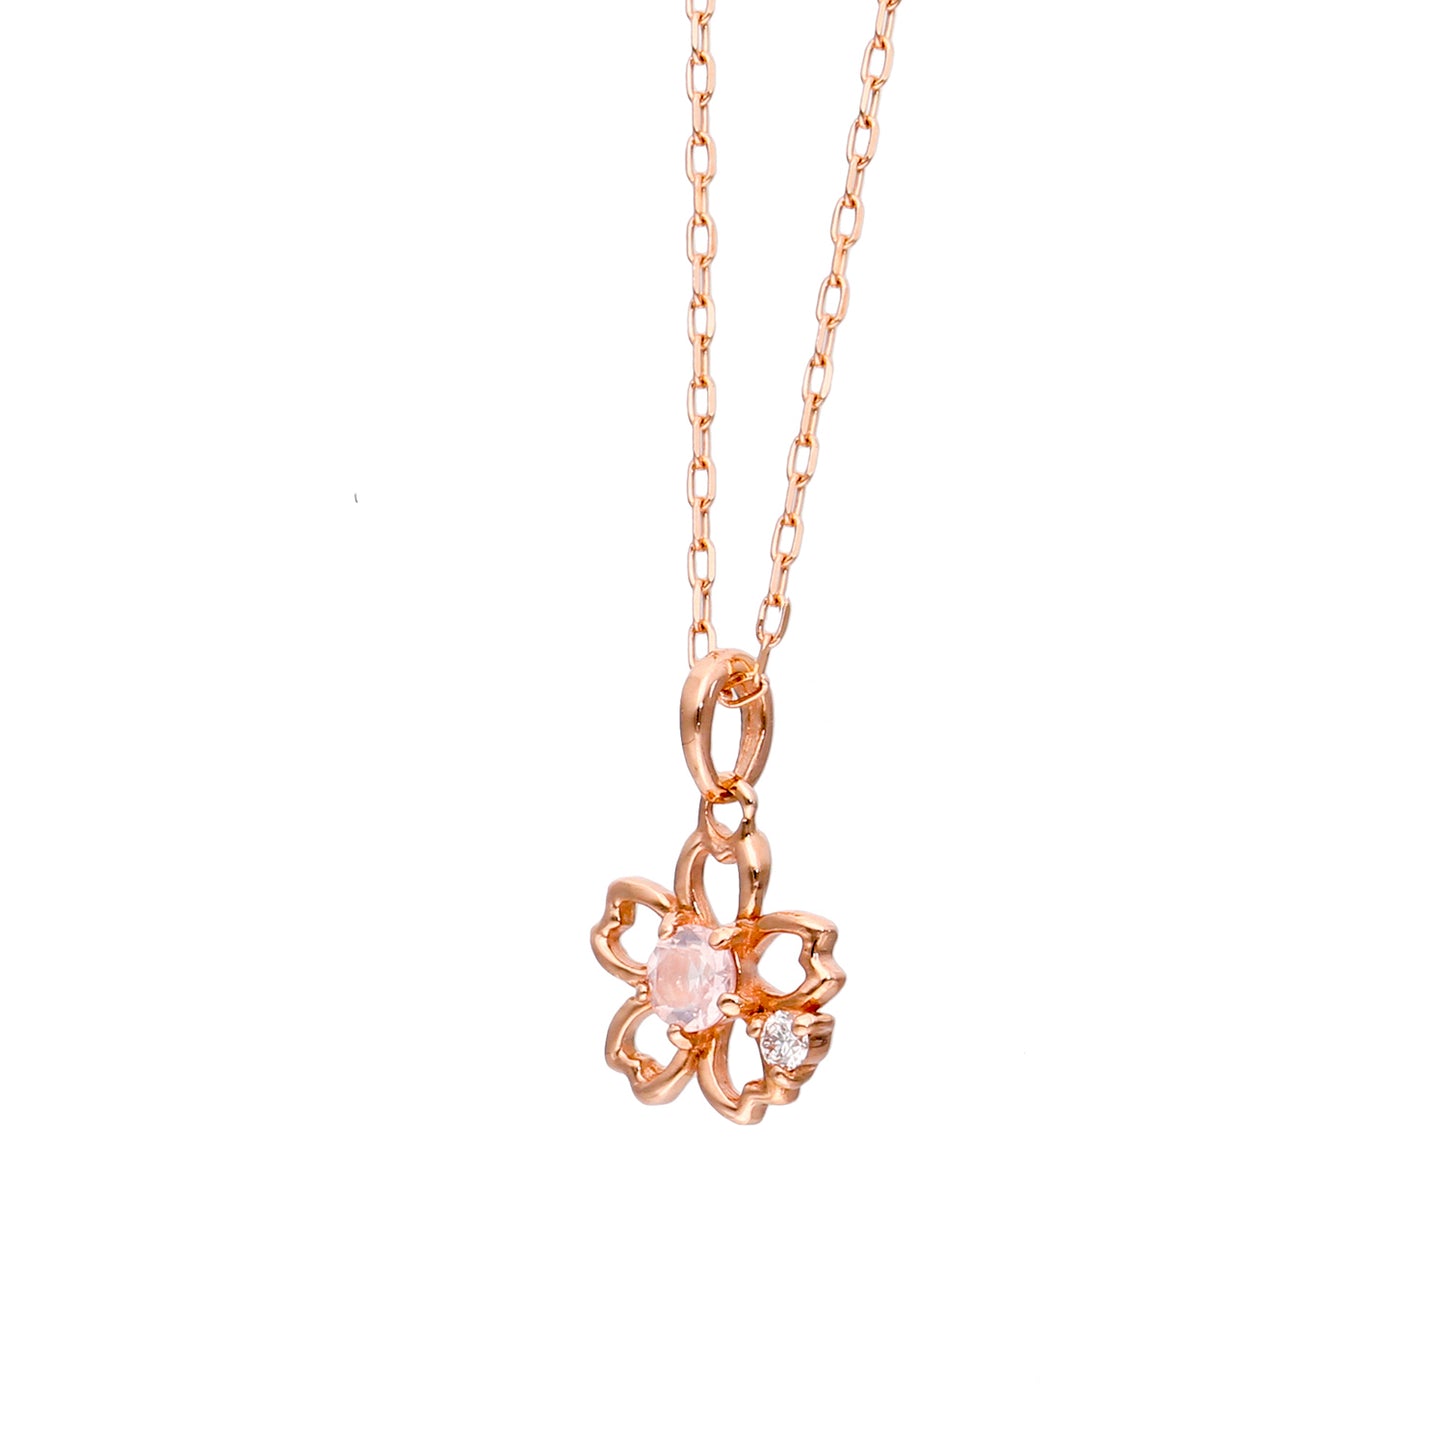 10 Karat Pink Gold Color Stone Sakura Necklace｜60-9409-9413